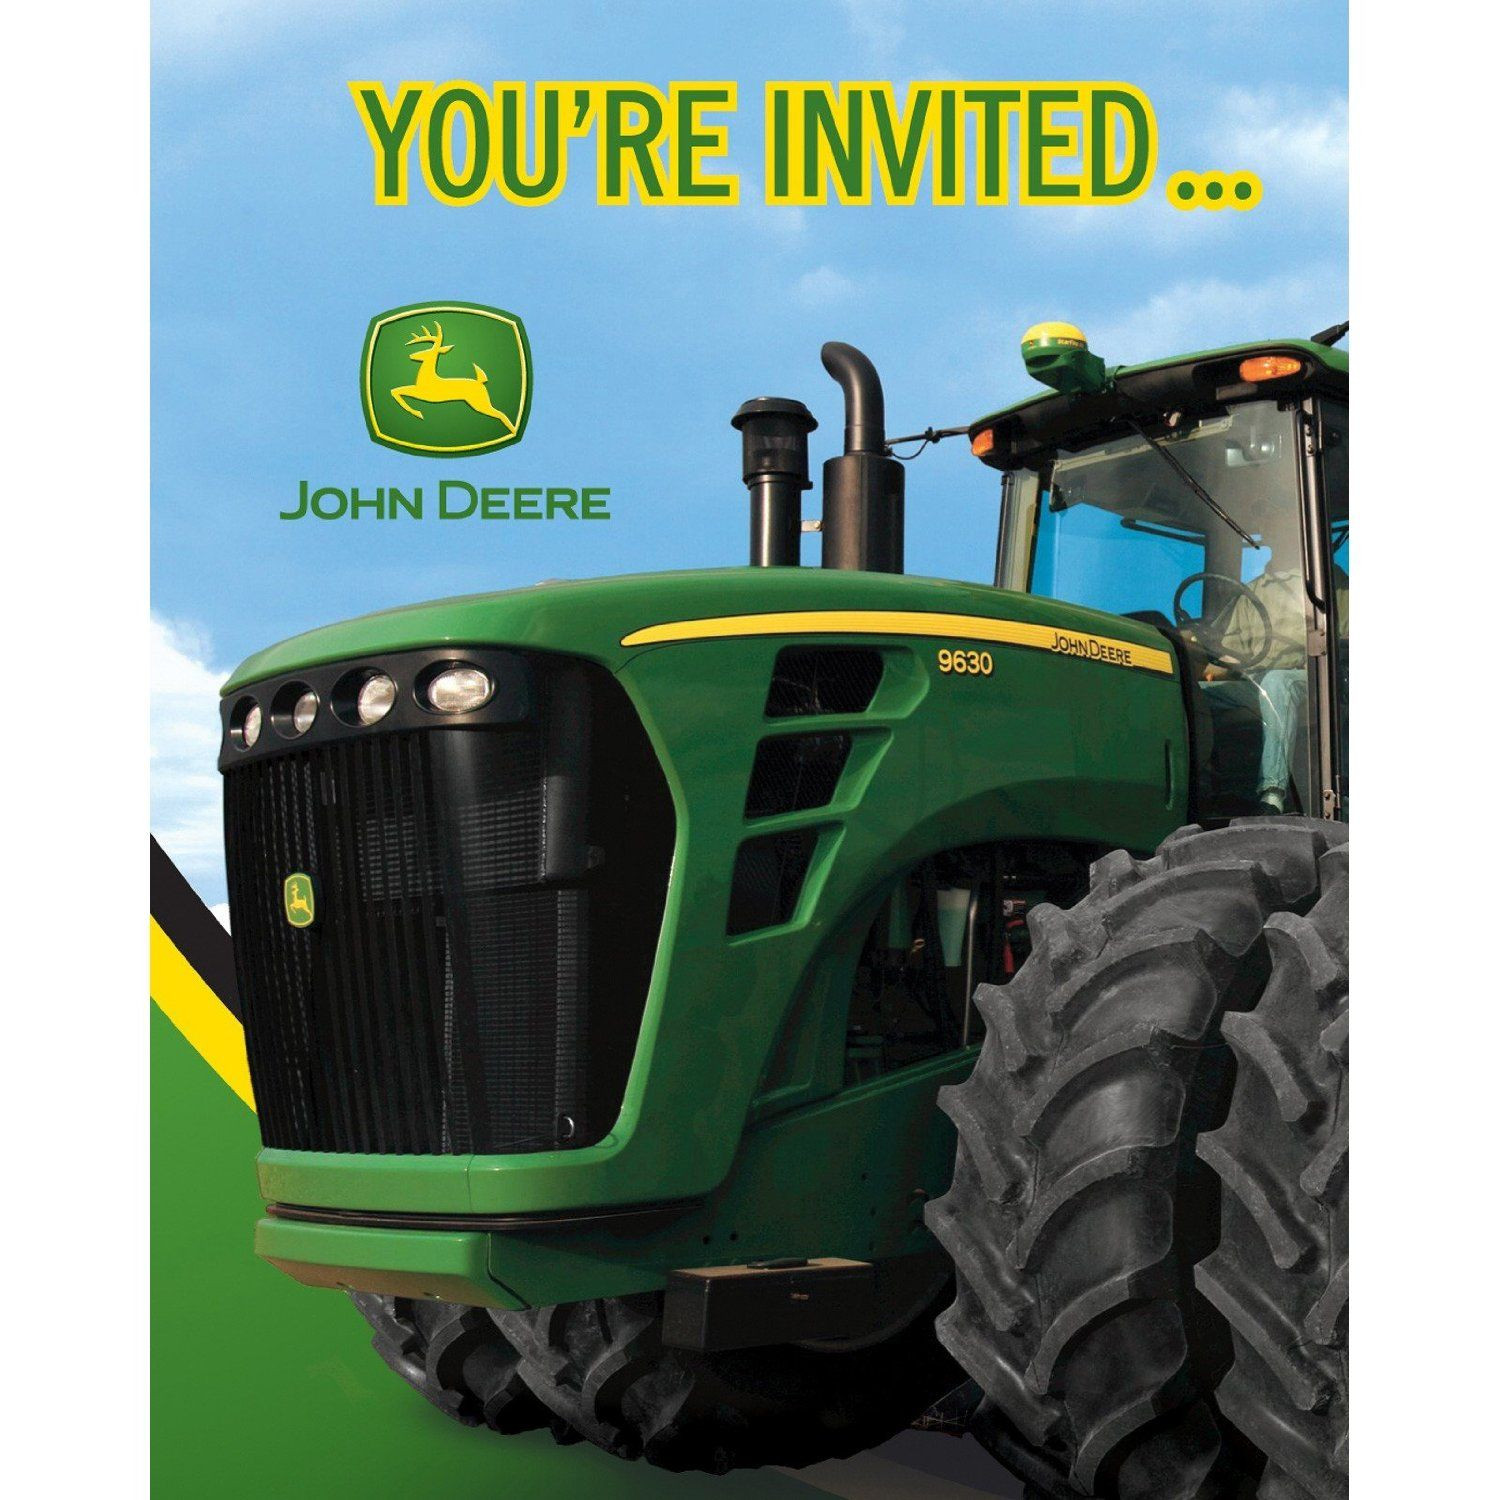 John Deere Birthday Party Invitations
 Pin on party invites